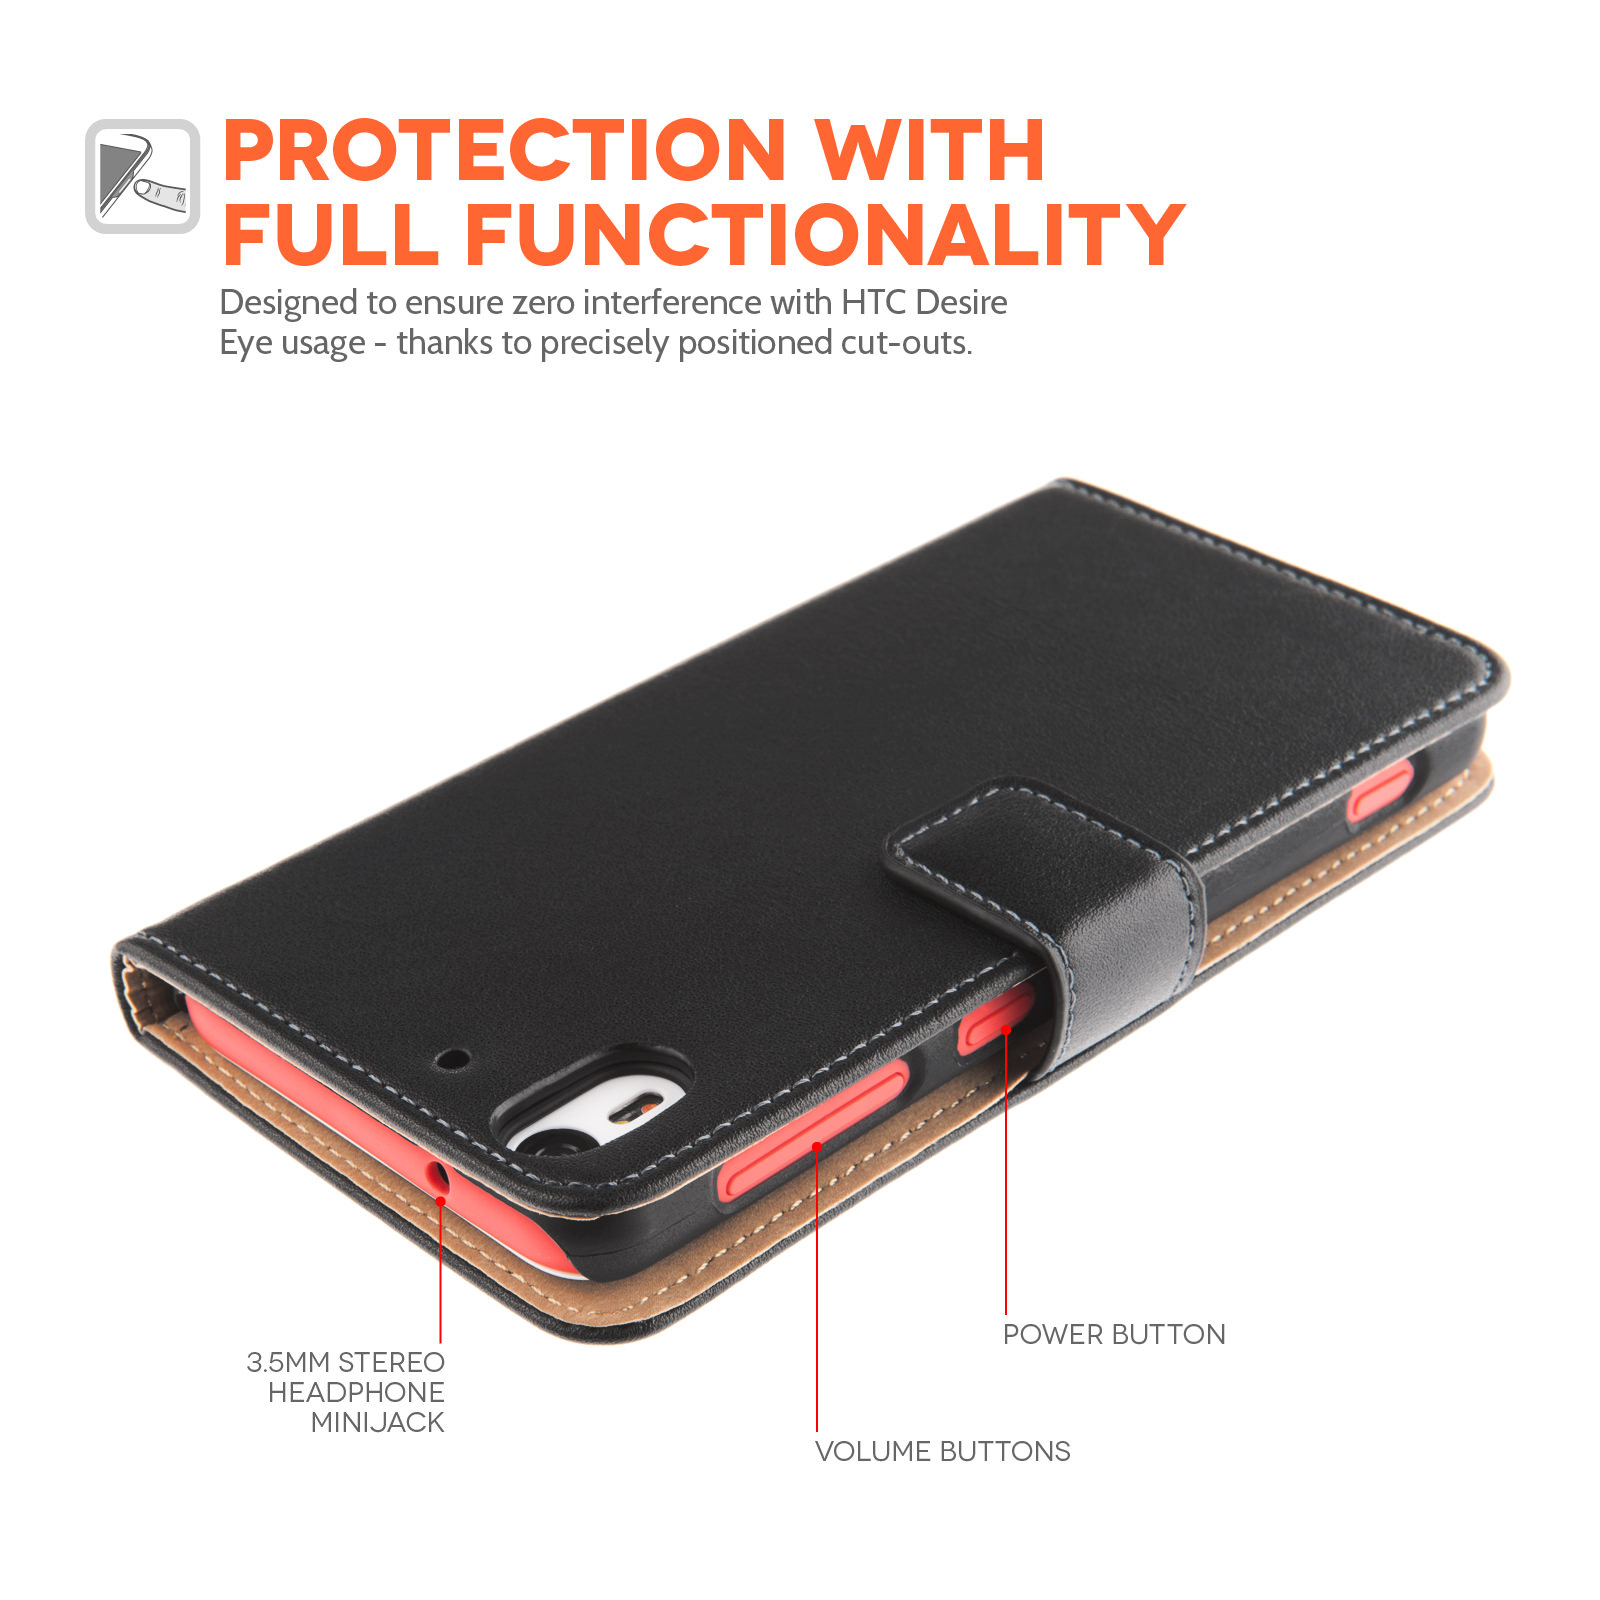 Caseflex HTC Desire EYE Real Leather Wallet Case - Black